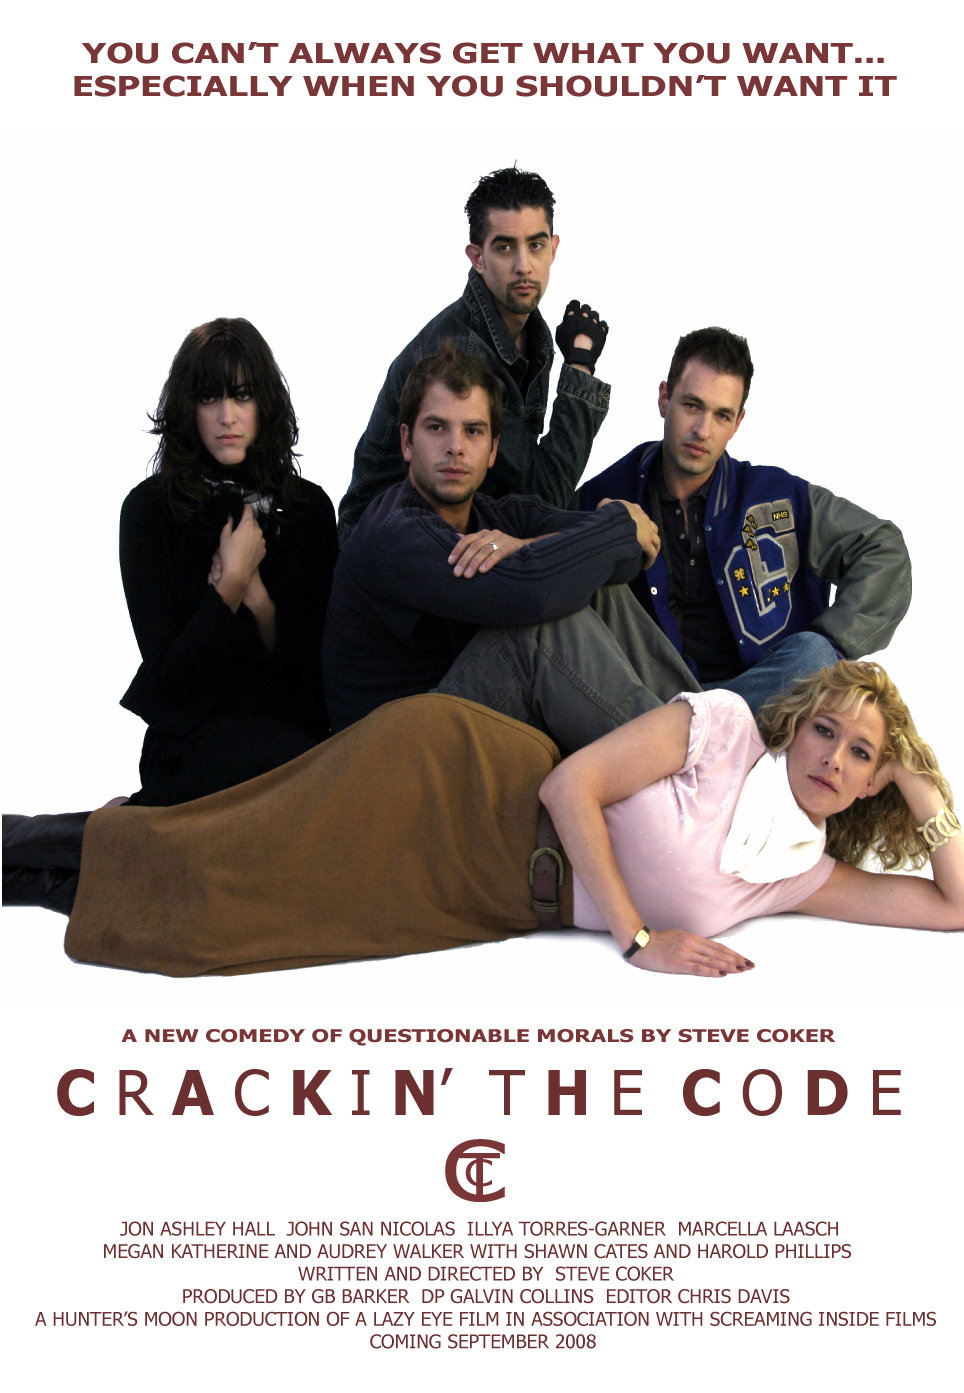 Crackin' the Code